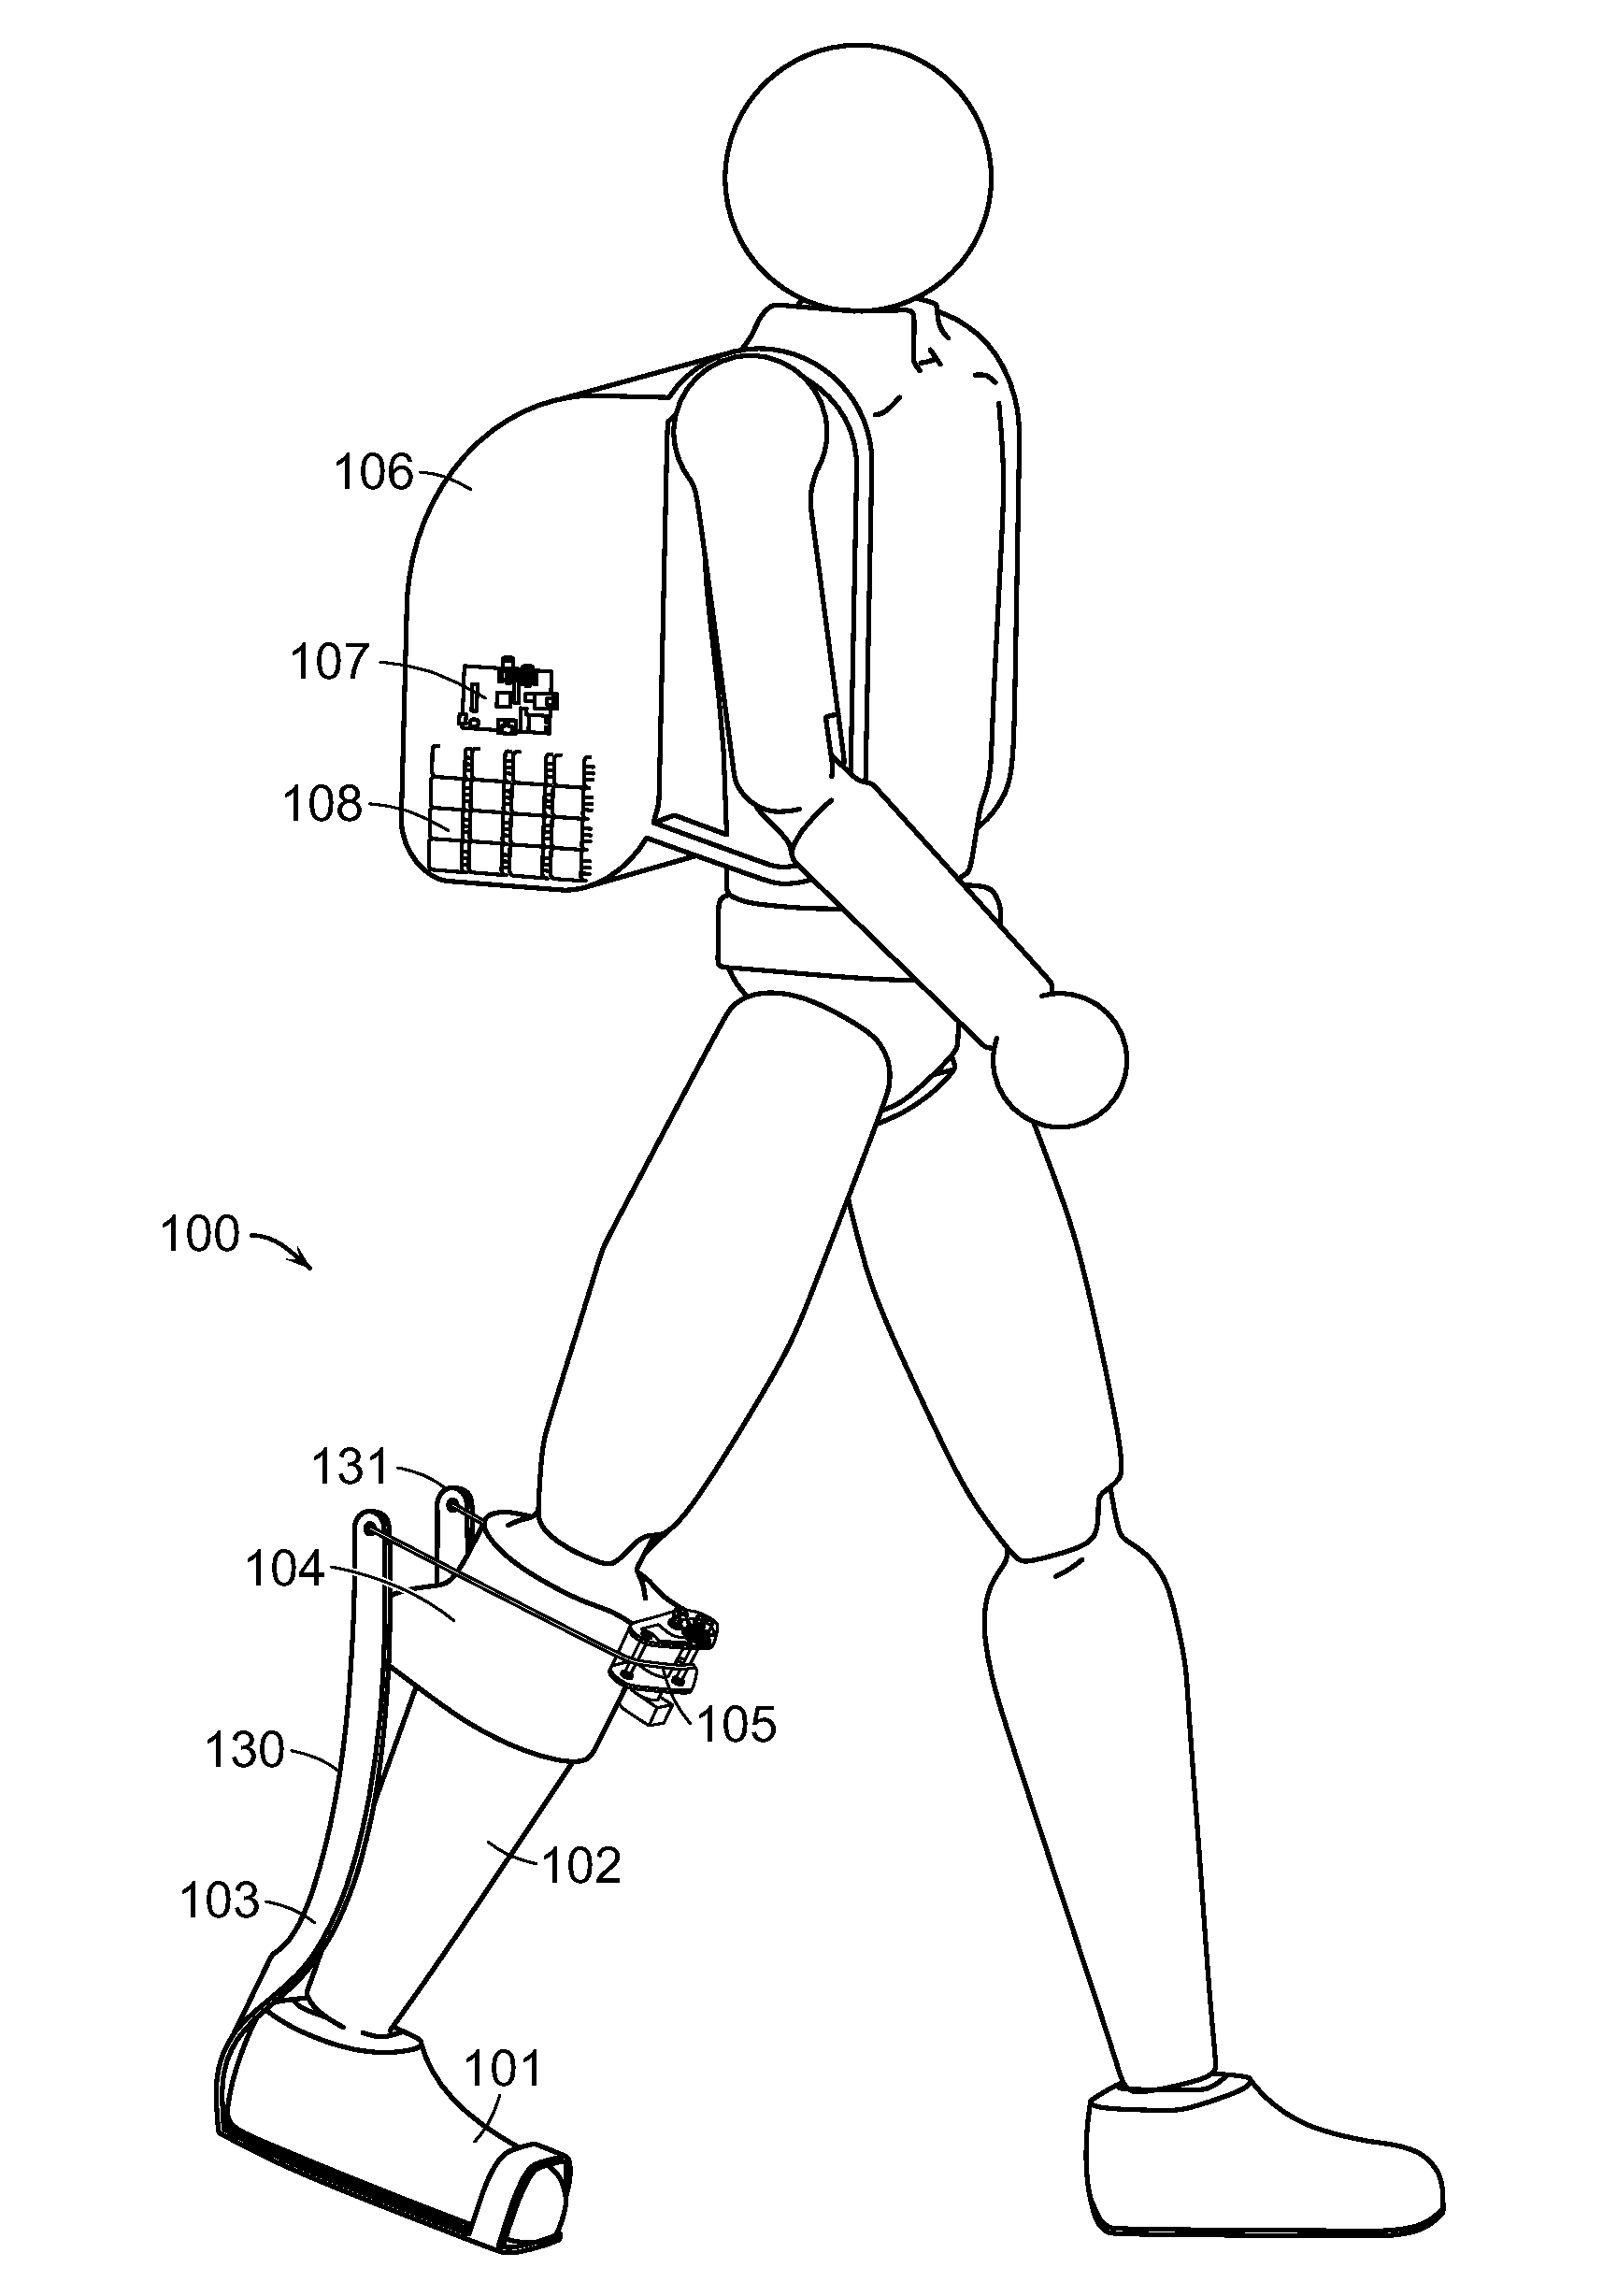 Optimal design of a lower limb exoskeleton or orthosis